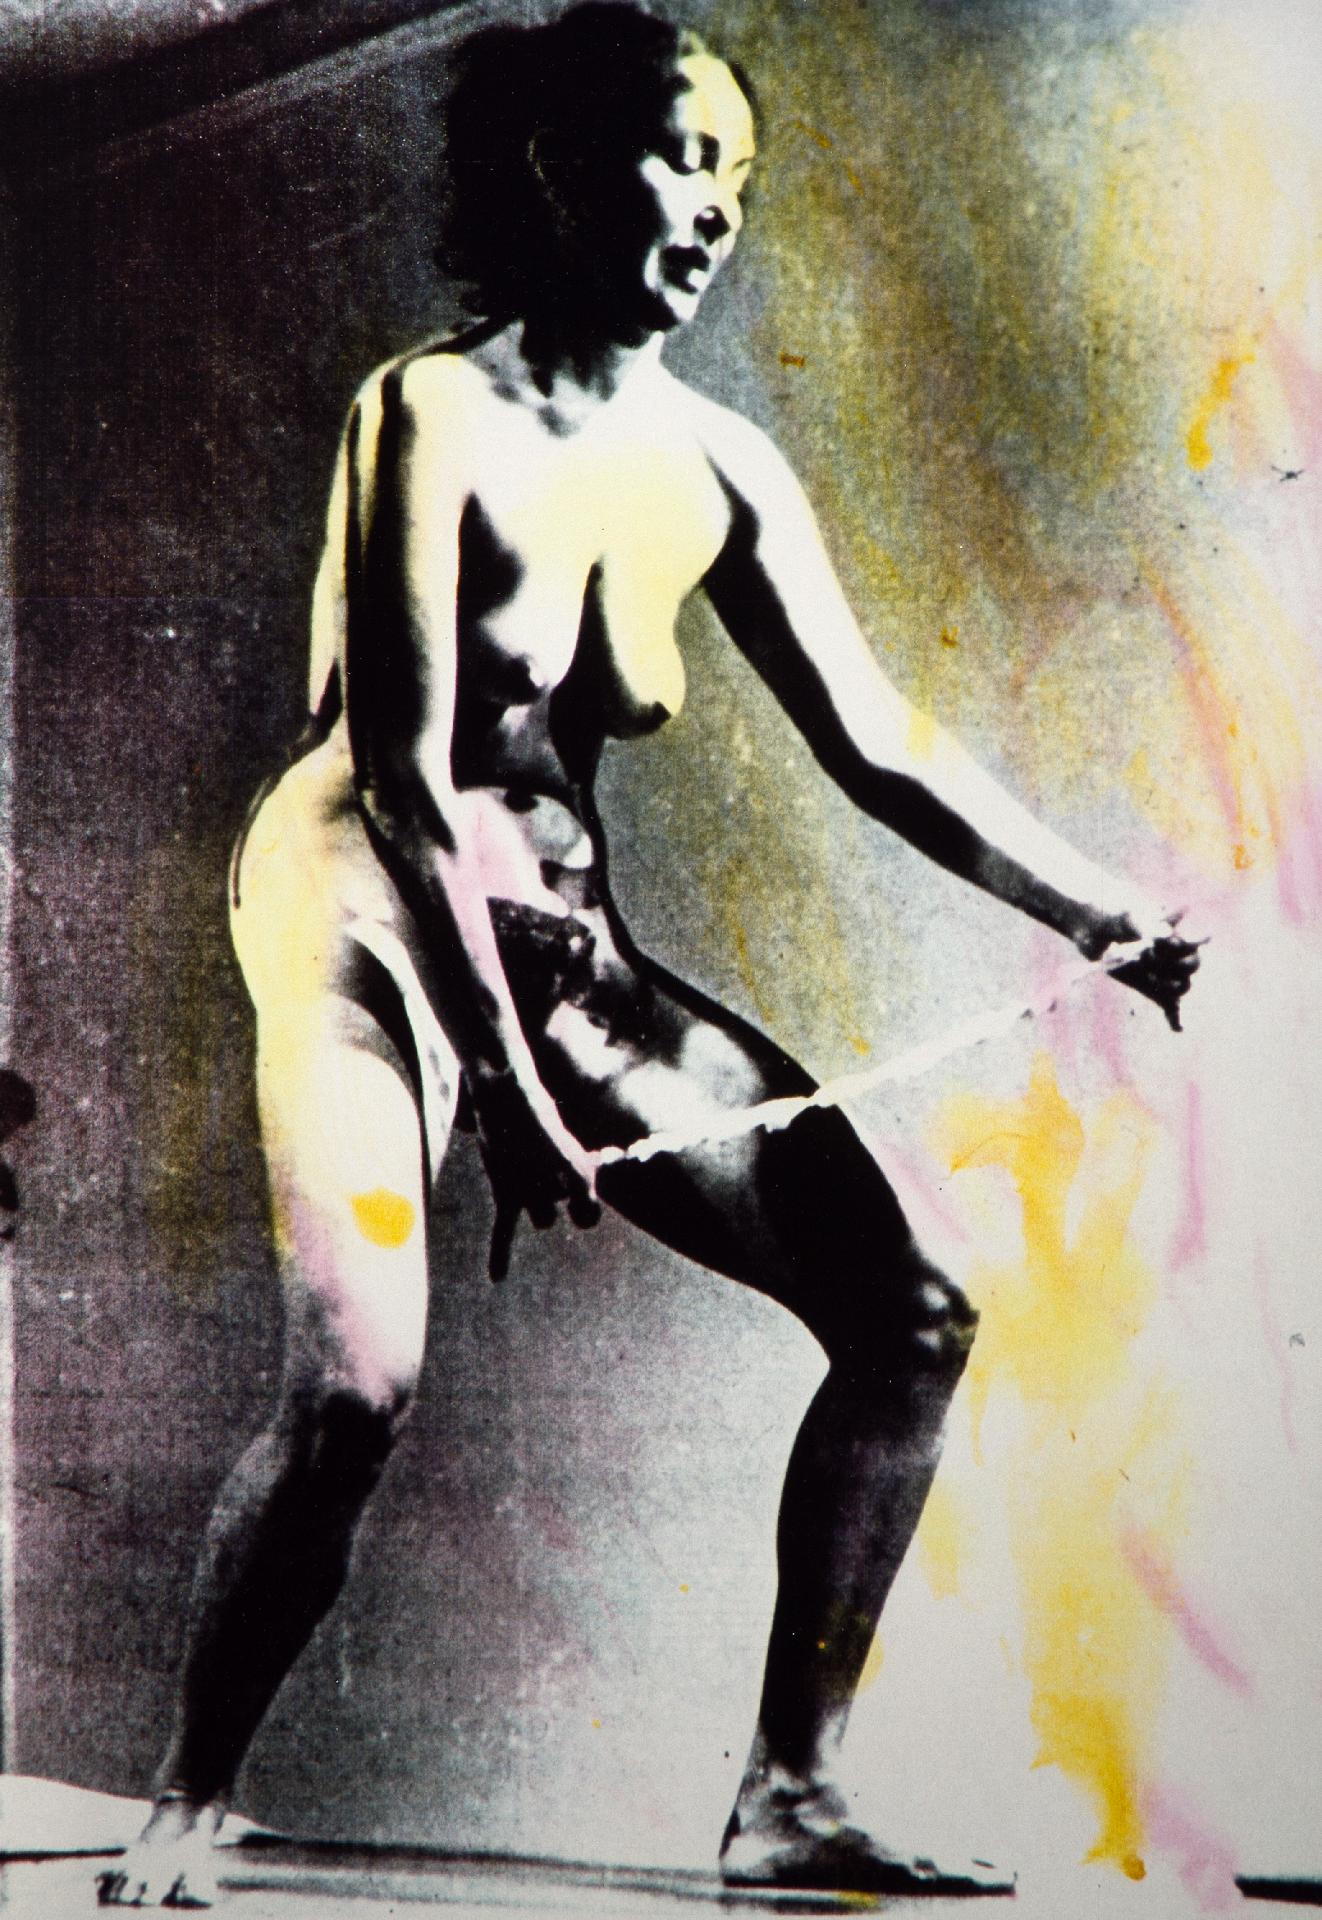 Carolee Schneemann - Interior Scroll (détail de la / detail from the 1975 performance), 1996